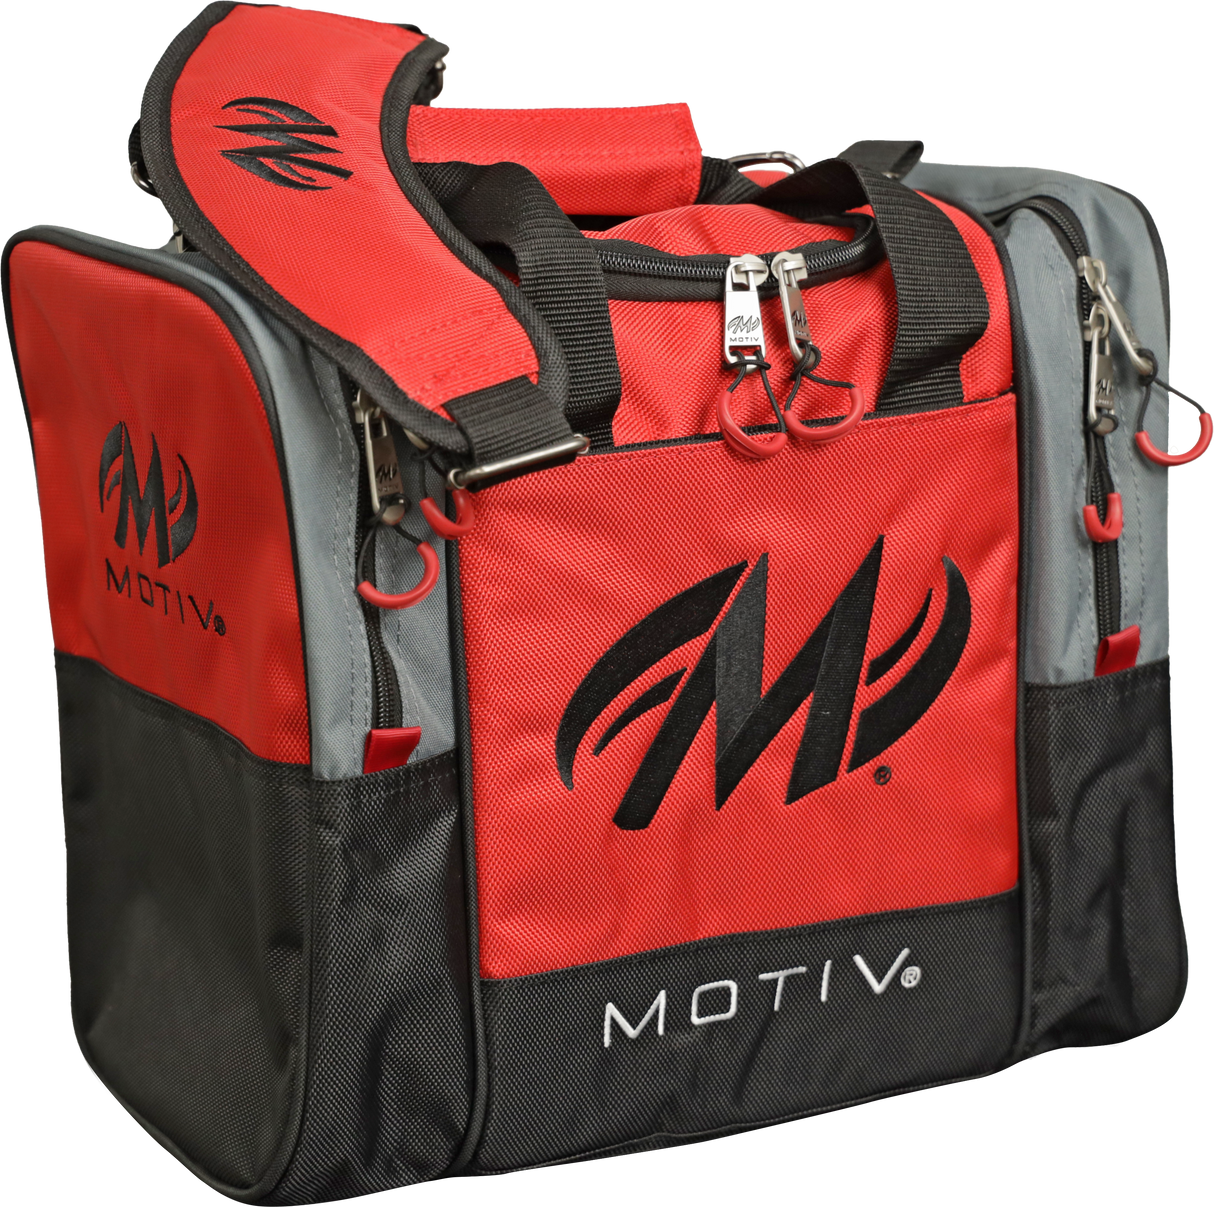 Motiv Shock 1 Ball Single Tote Fire Red Bowling Bag suitcase league tournament play sale discount coupon online pba tour